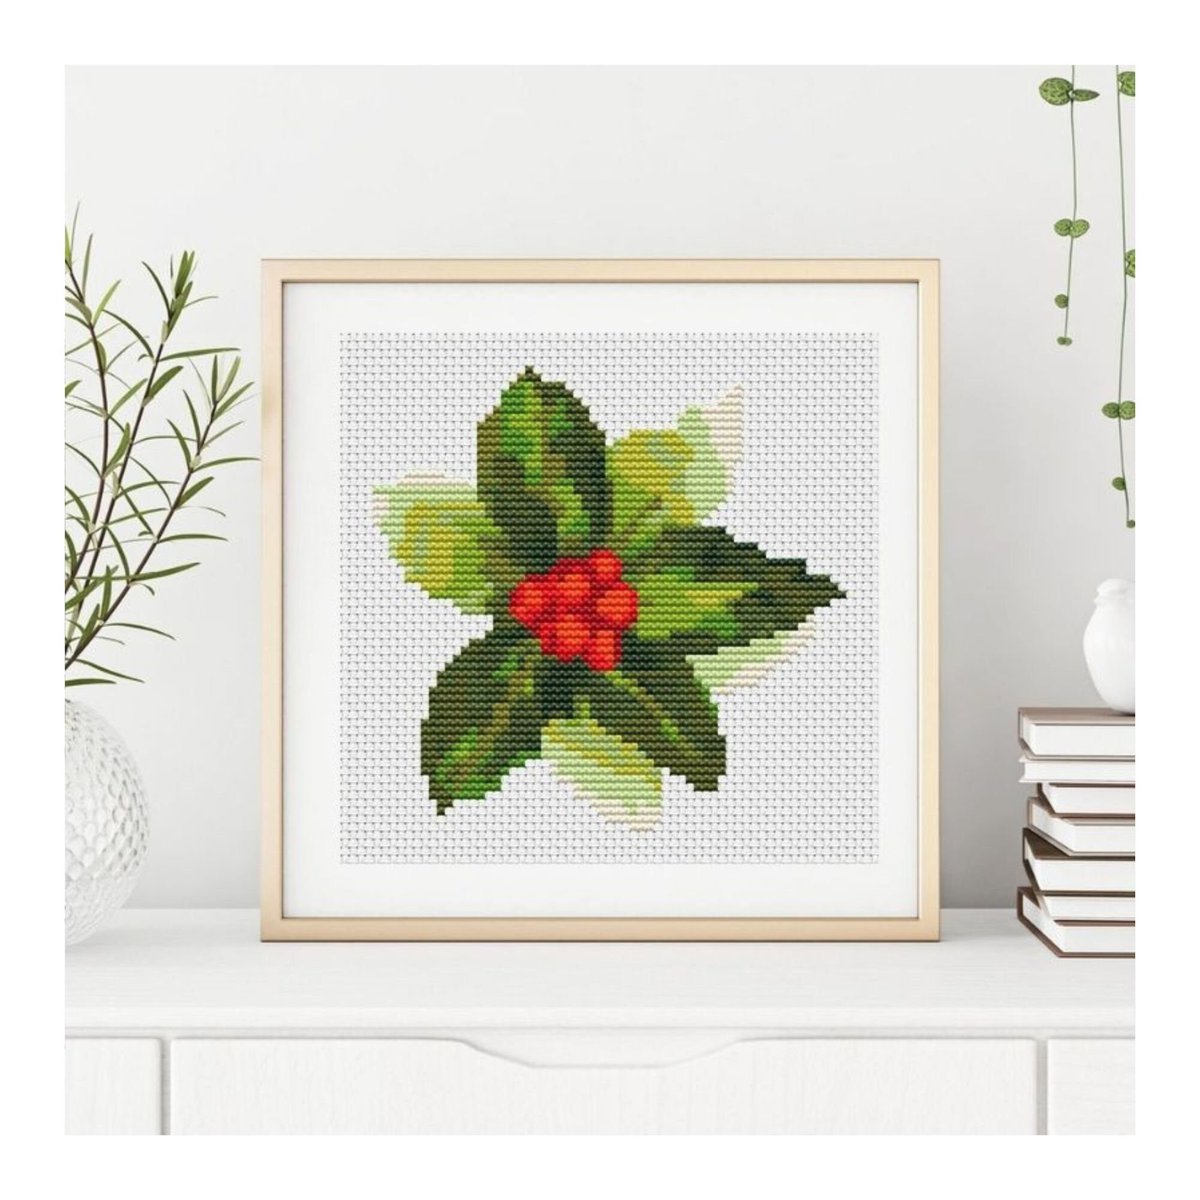 Christmas Holly Cross Stitch Pattern | Holiday Cross Stitch etsy.me/3O0rrJv #crossstitch #crossstitchpattern #crossstitchchart #minicrossstitch #hollycrossstitch #xmascrossstitch #embroiderychart #holidaycrossstitch #christmas